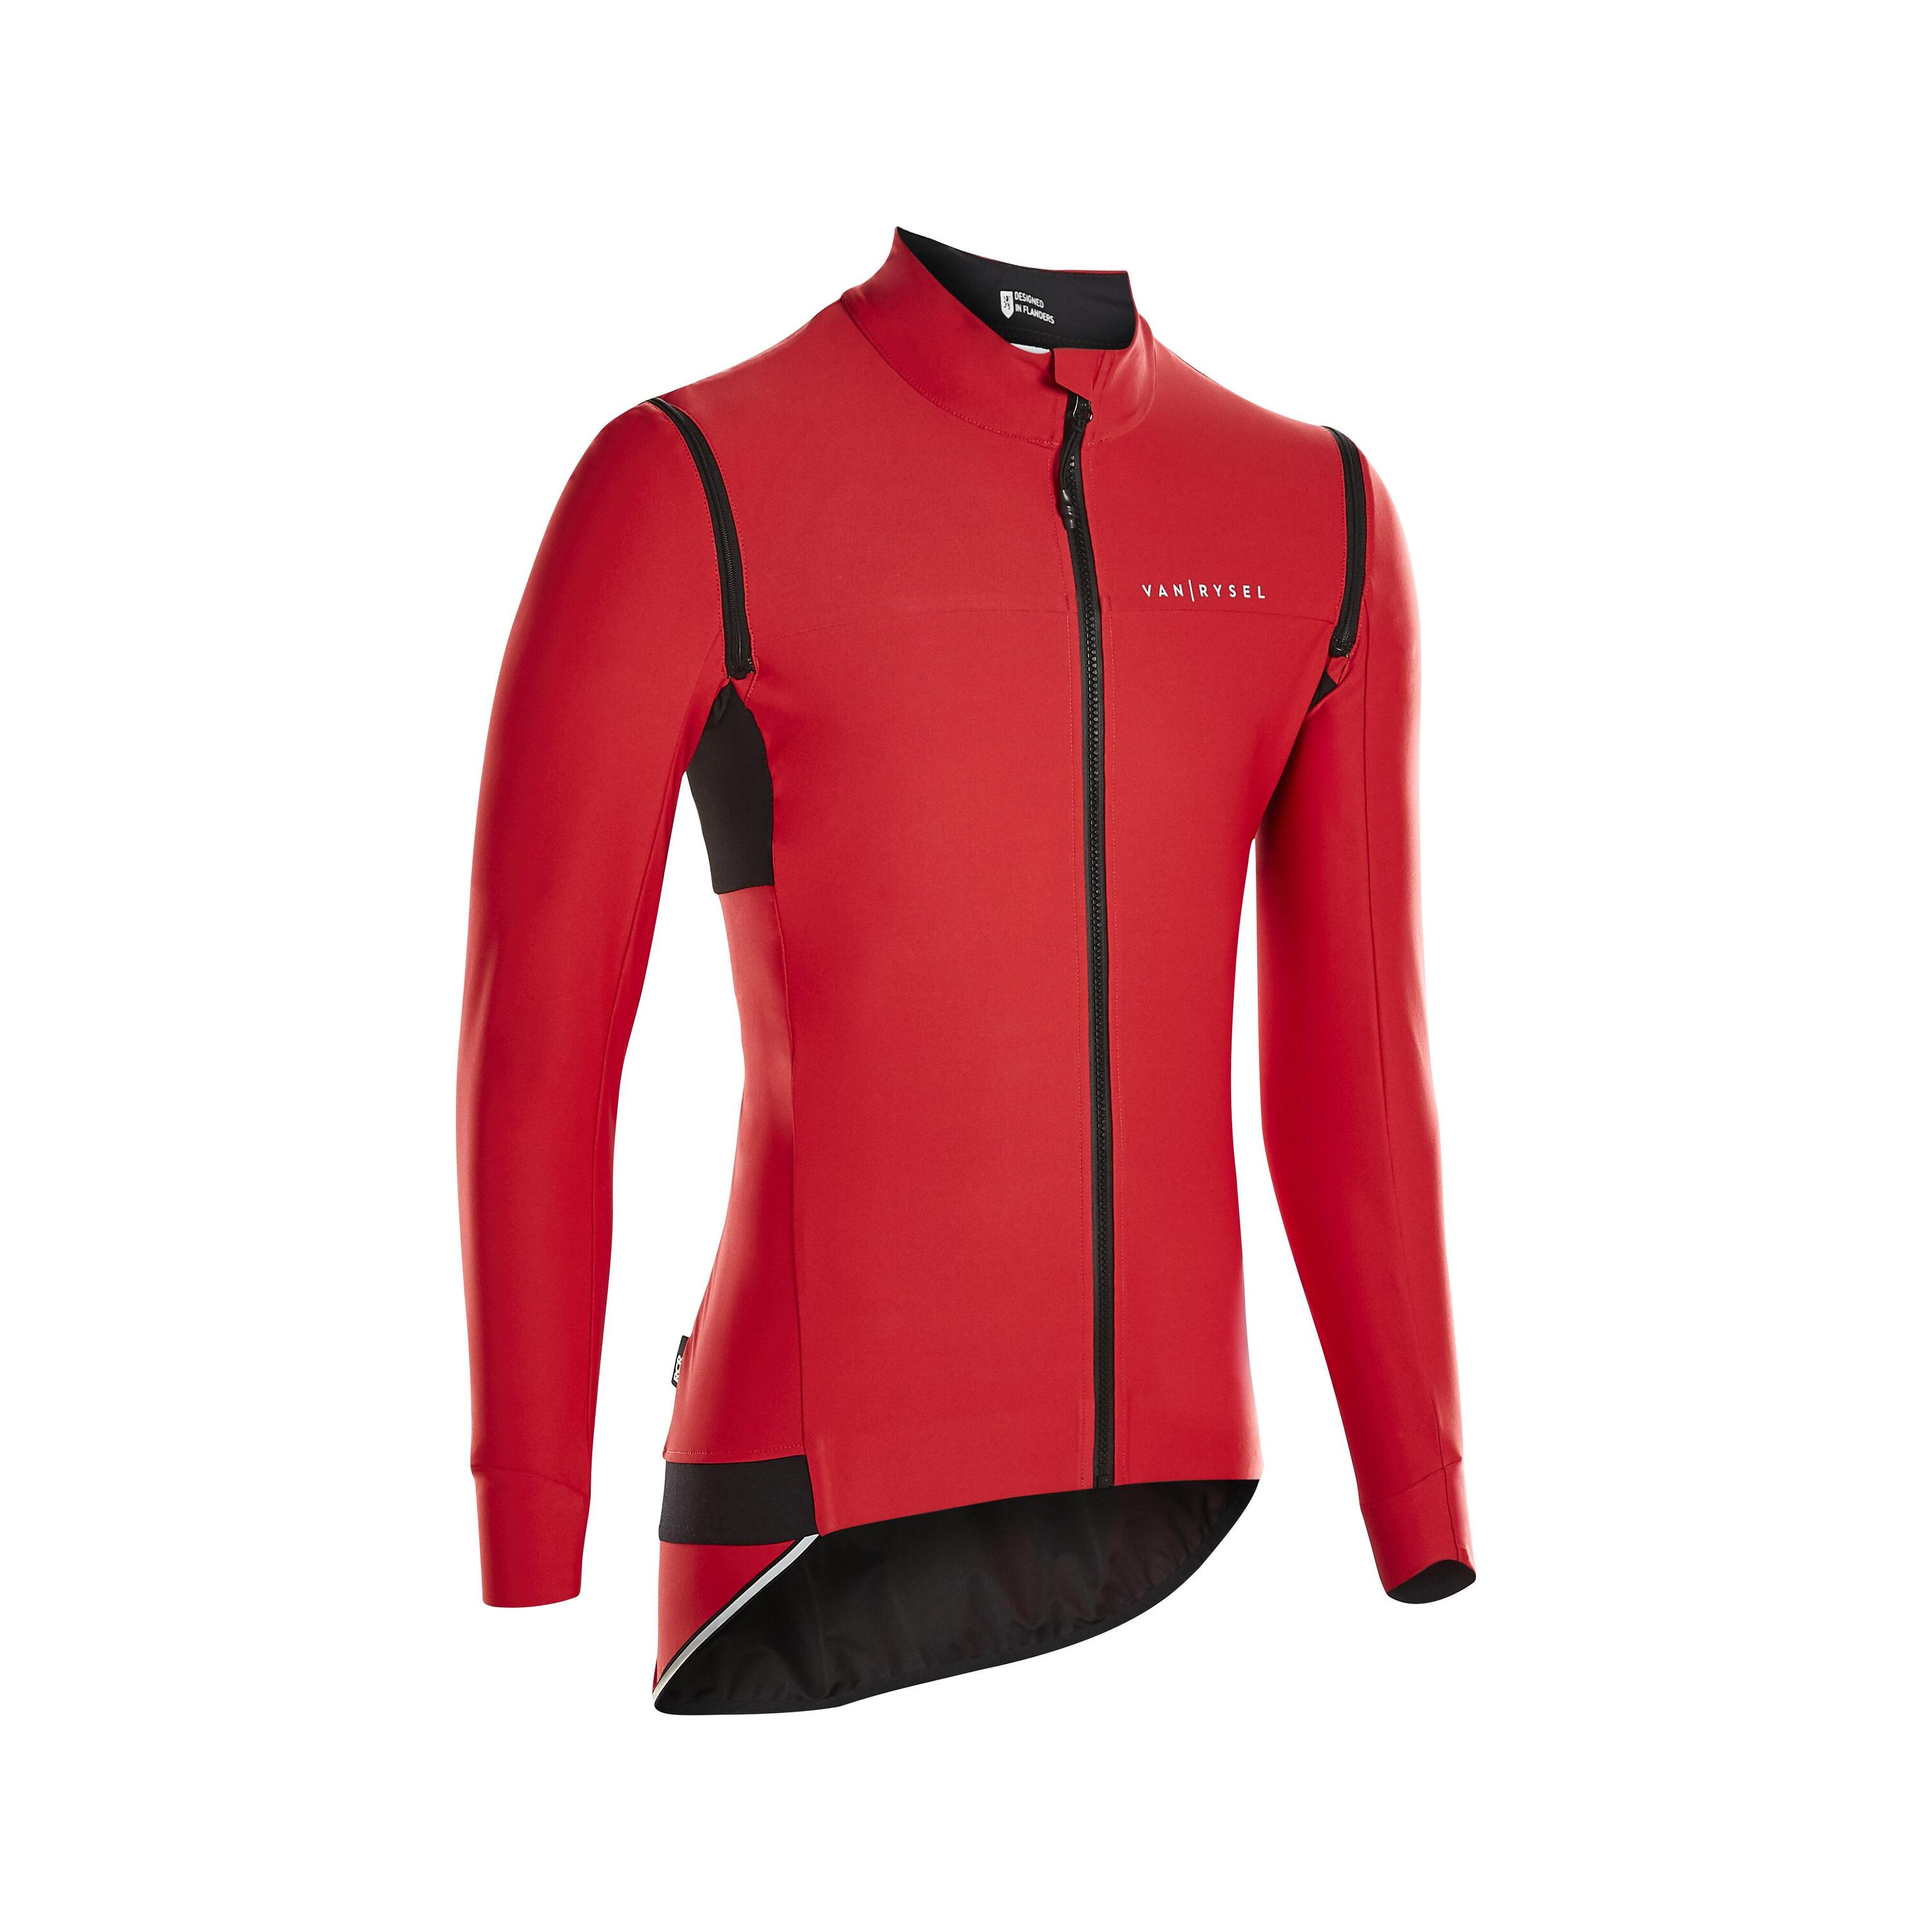 Men's Long-Sleeved Road Cycling Showerproof Convertible Jacket Racer - Red 1/4